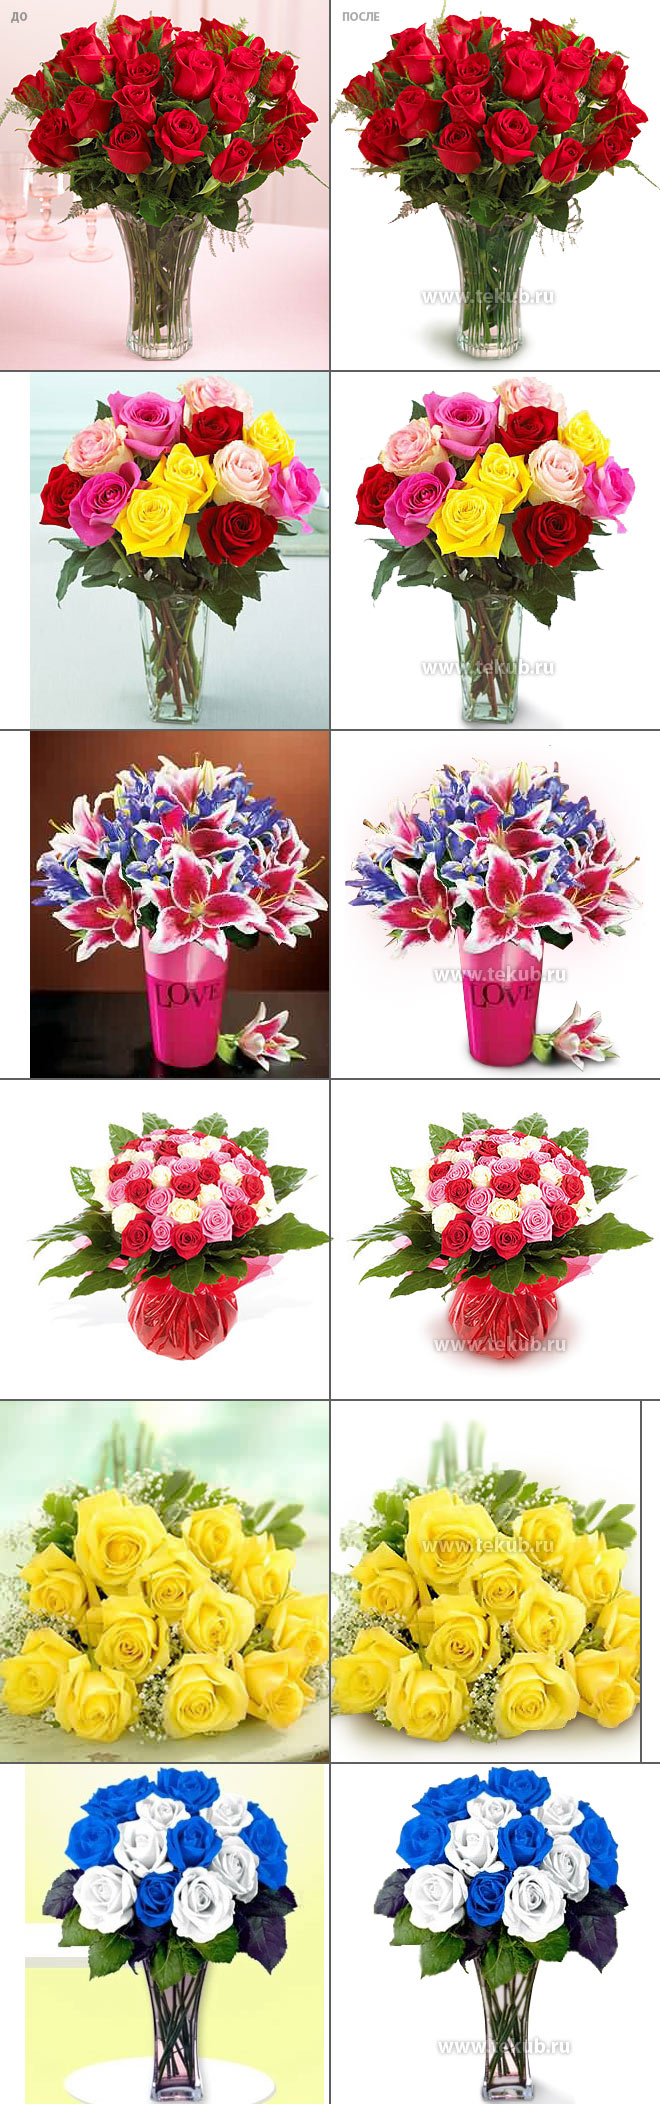 www.tekub.ru (цветы)